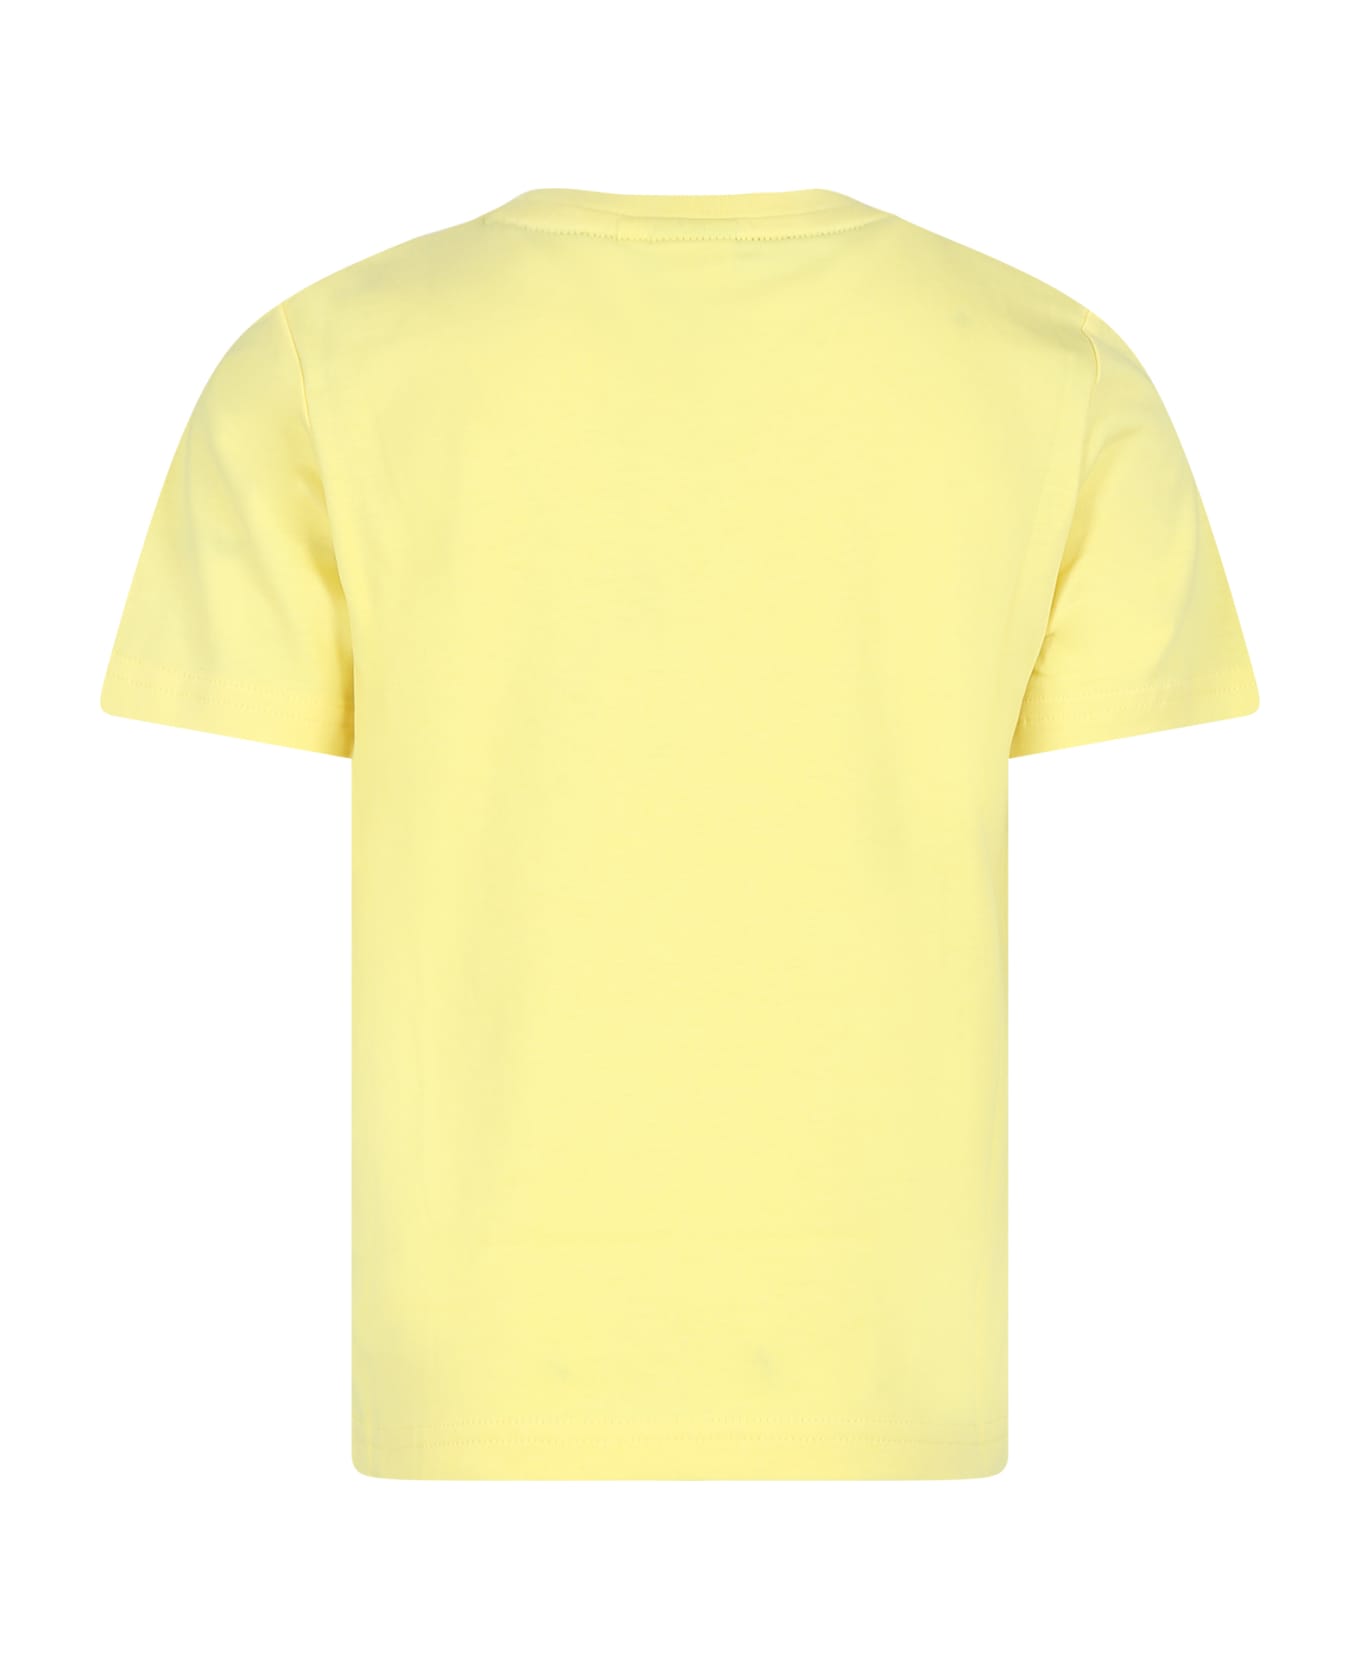 Hugo Boss Yellow T-shirt For Boy With Logo - Yellow